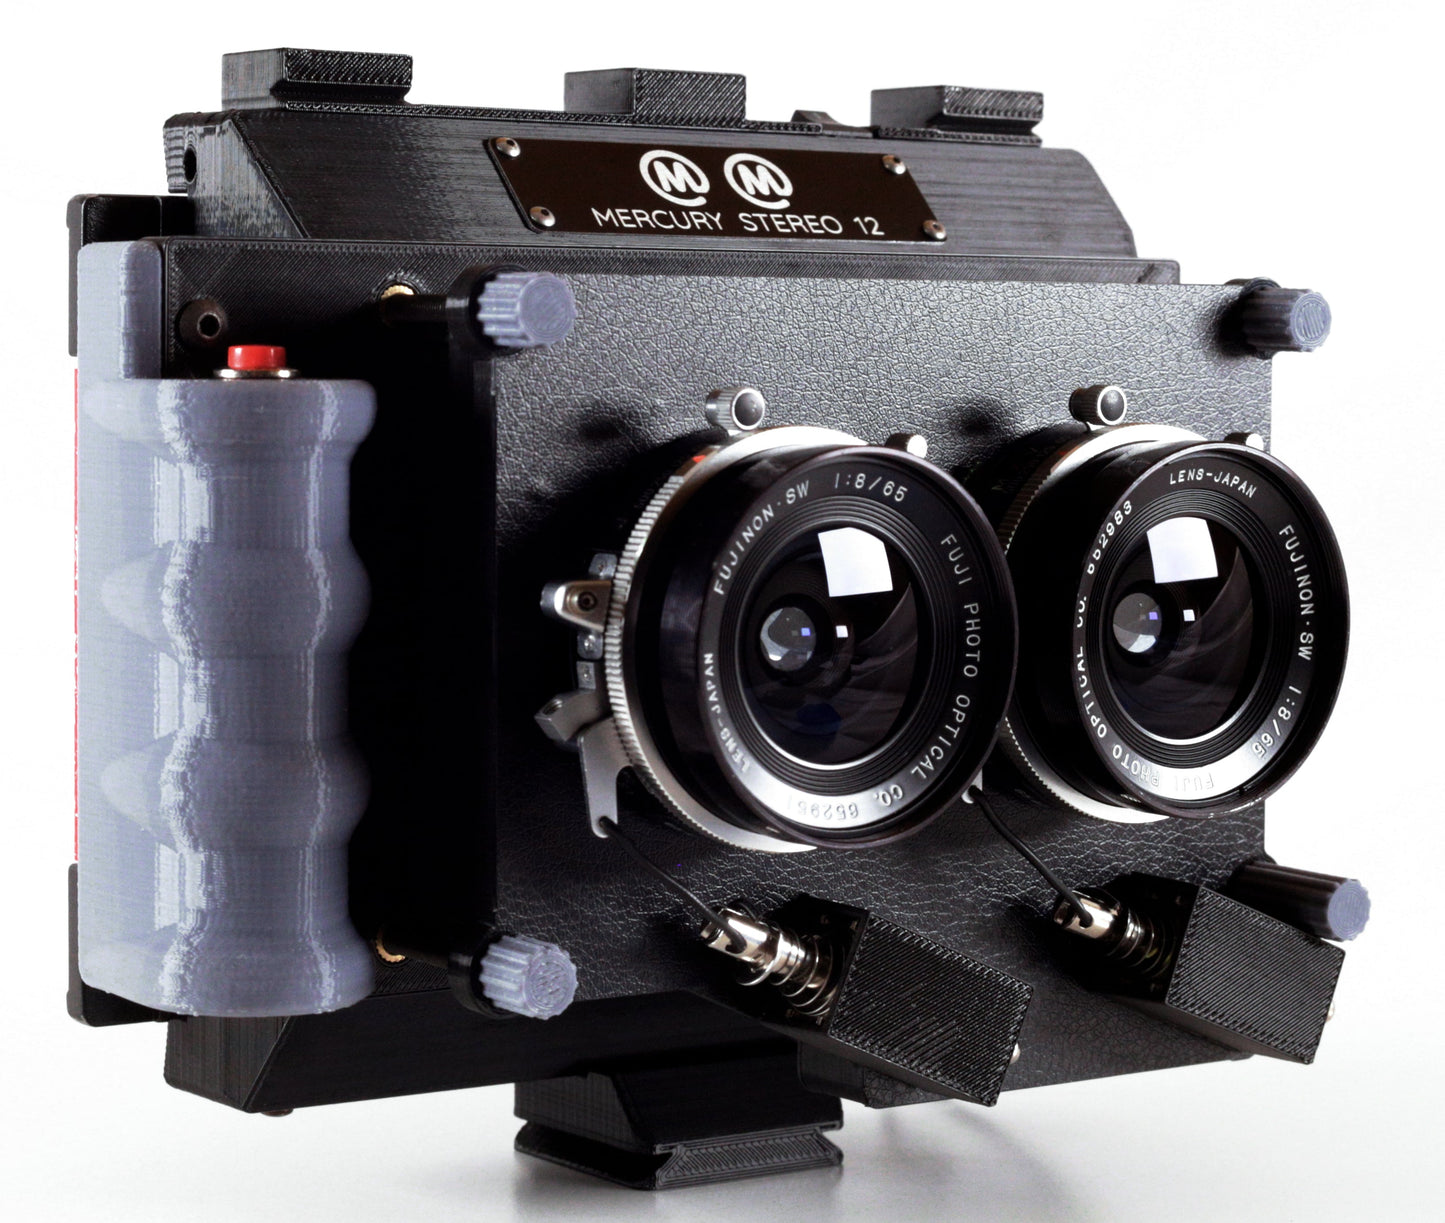 Mercury Stereo 12 Camera - Standard Kit